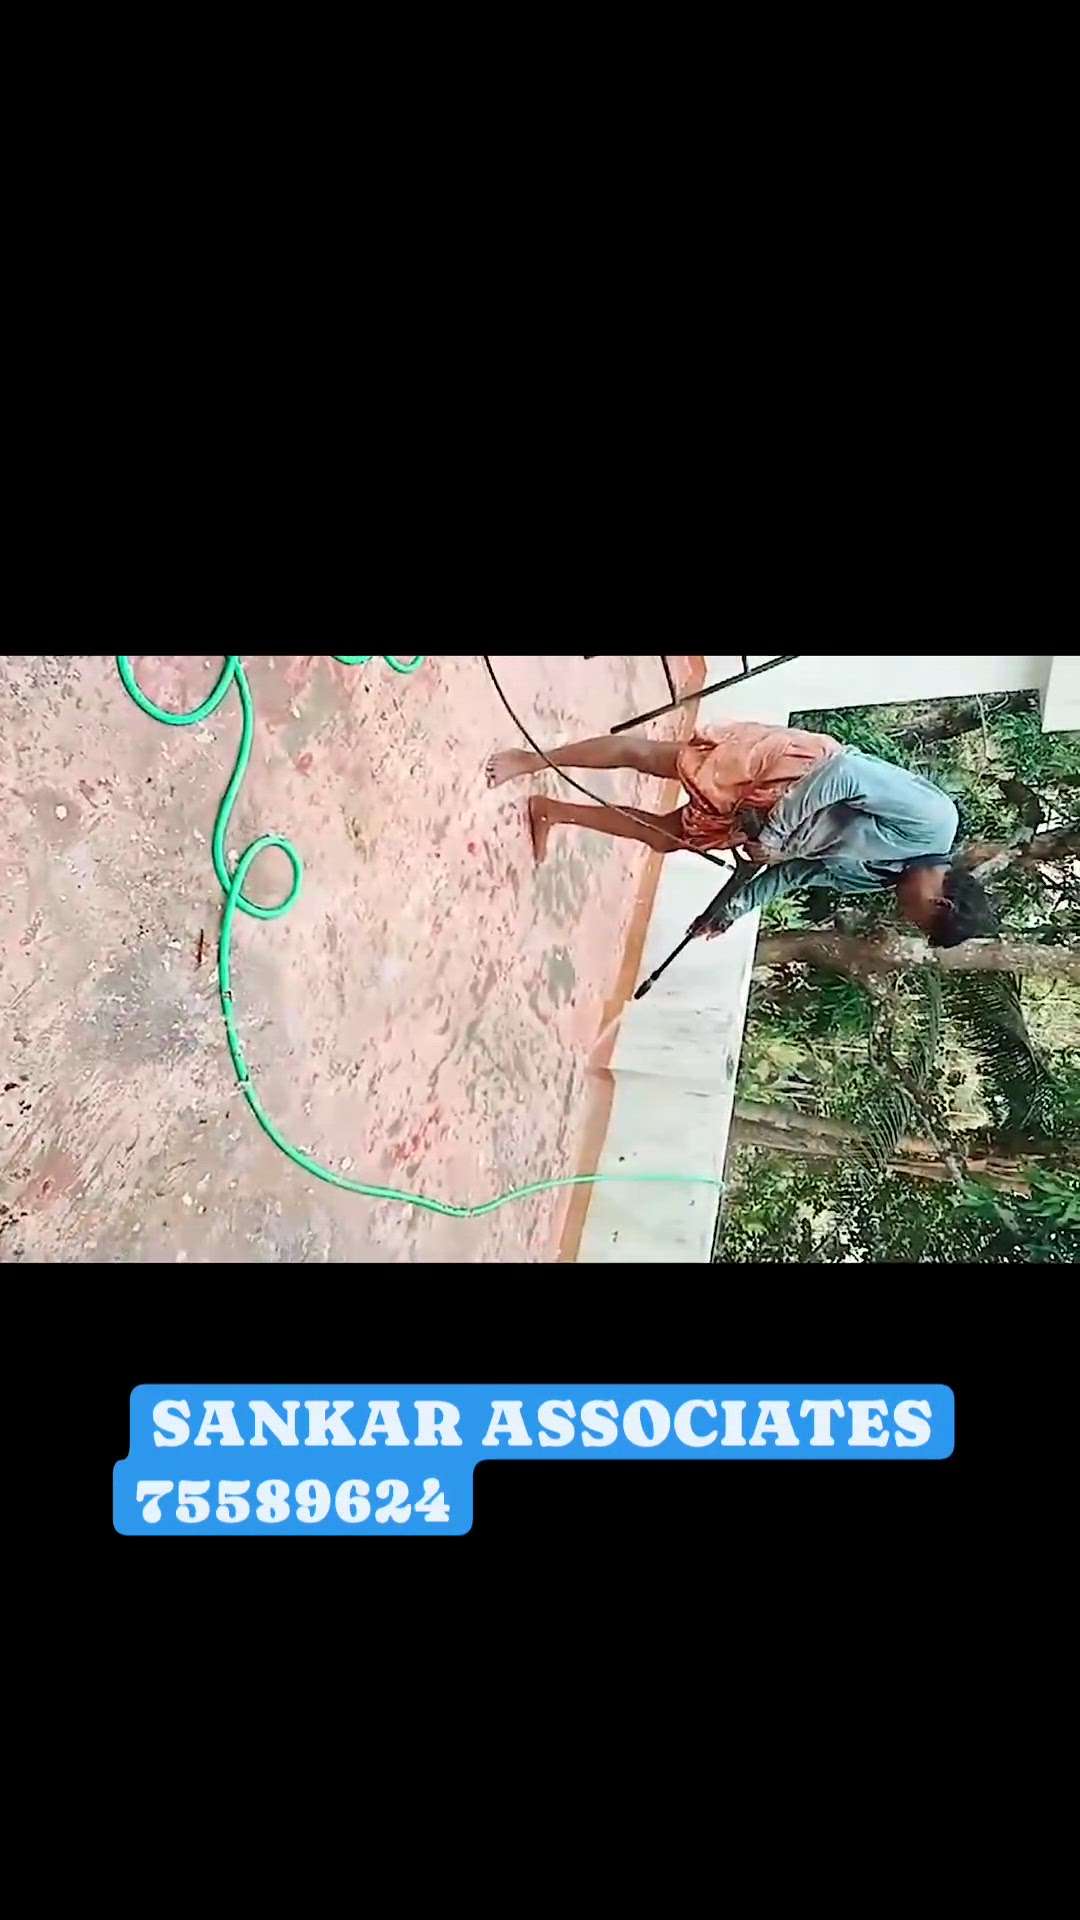 Completed Project 
Location : Eravankara, India 
Client :Mr. Sabu George

Material : Sika 

Scope of work:Terrace Waterproofing

For Enquiry kindly contact us
7558962449,7994755349
Website:http://sankarassociatesindia.com/
Mail id:Sankarassociates2022@gmail.com

#waterproofing #sankarassociates #civil #construction
#waterproofing #leakage #putty #Mavelikkara #kerala #india #waterproof #aranmula #waterproofingsolutions #kerala #leakage #kerala #stopleakage #punalur #Mavelikkara